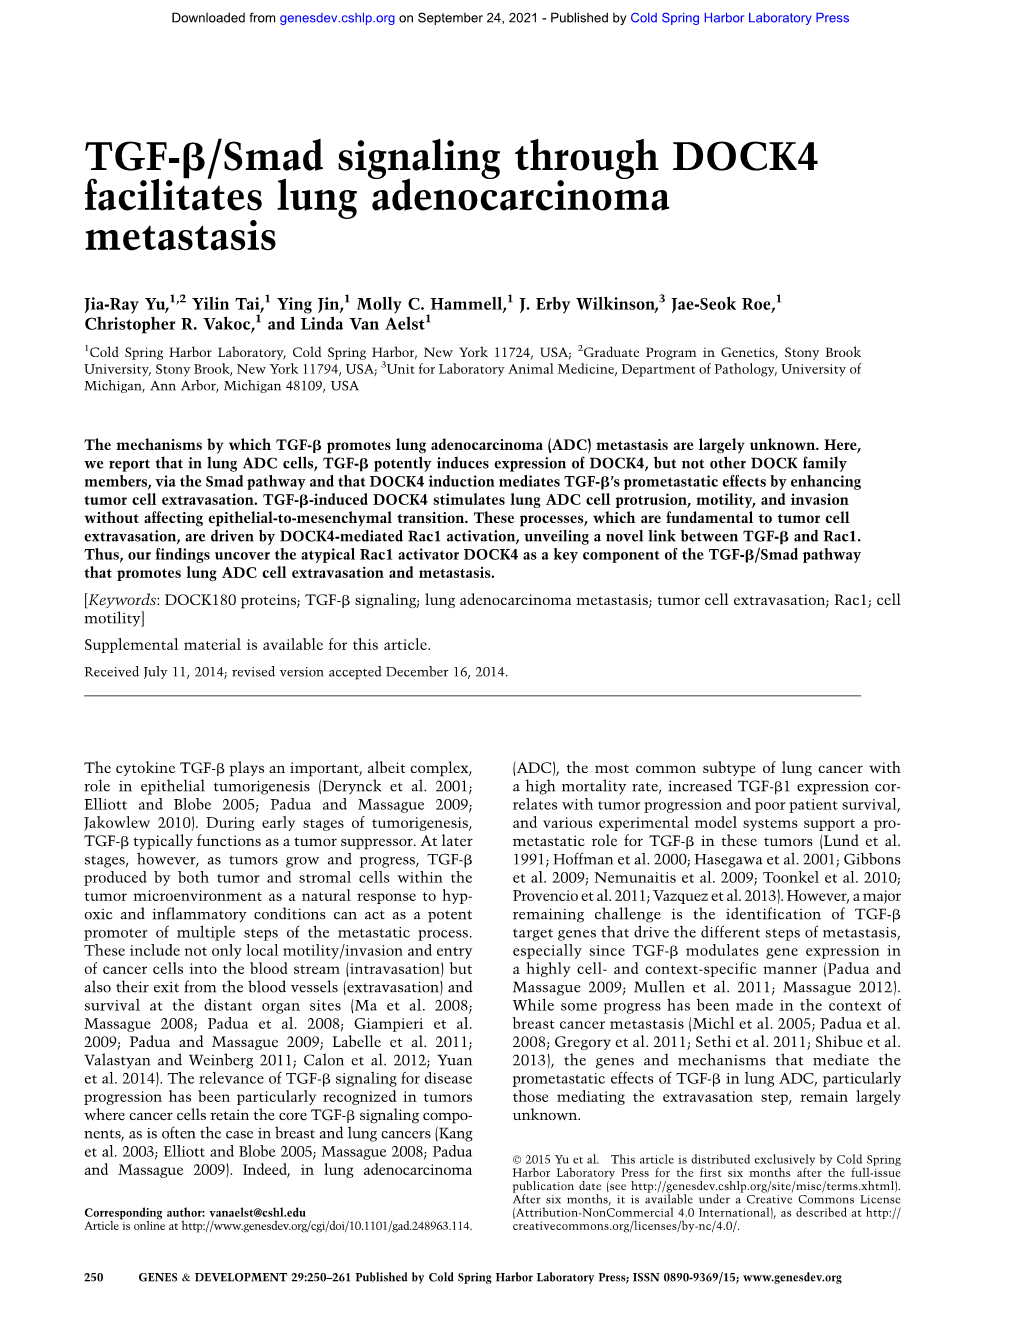 TGF-B/Smad Signaling Through DOCK4 Facilitates Lung Adenocarcinoma Metastasis